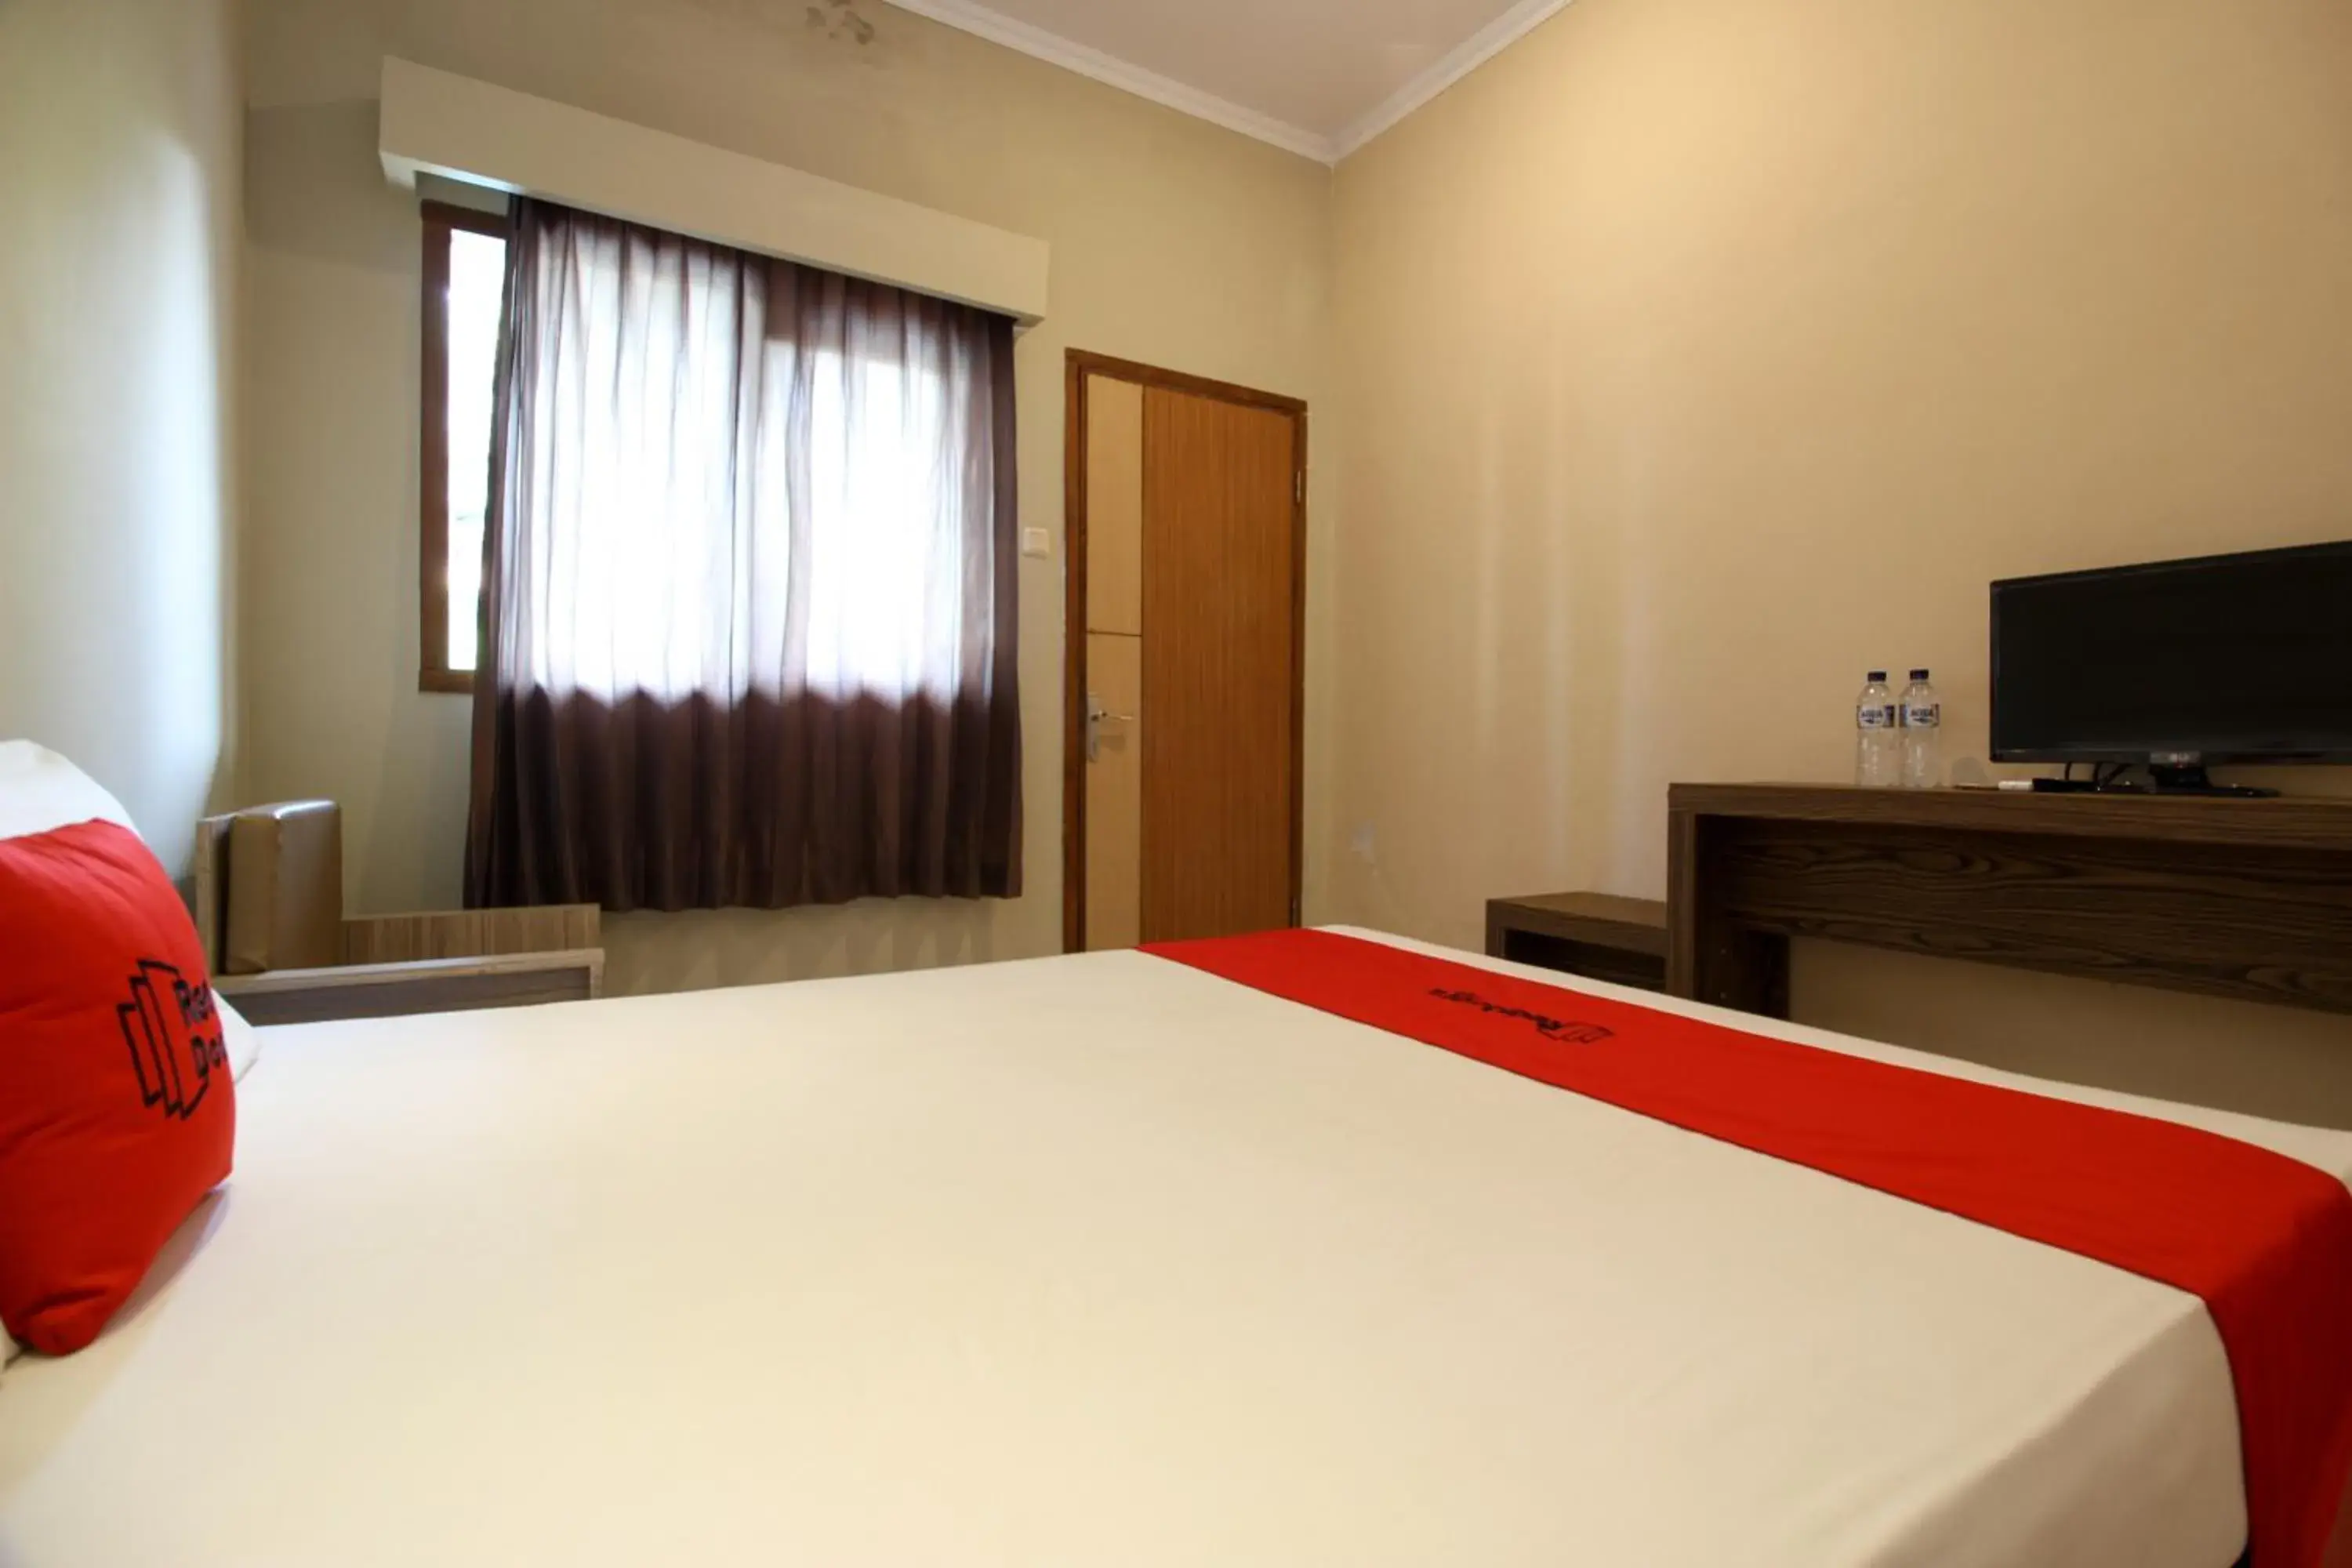 Bedroom, TV/Entertainment Center in RedDoorz Plus @ Jalan Damai 2